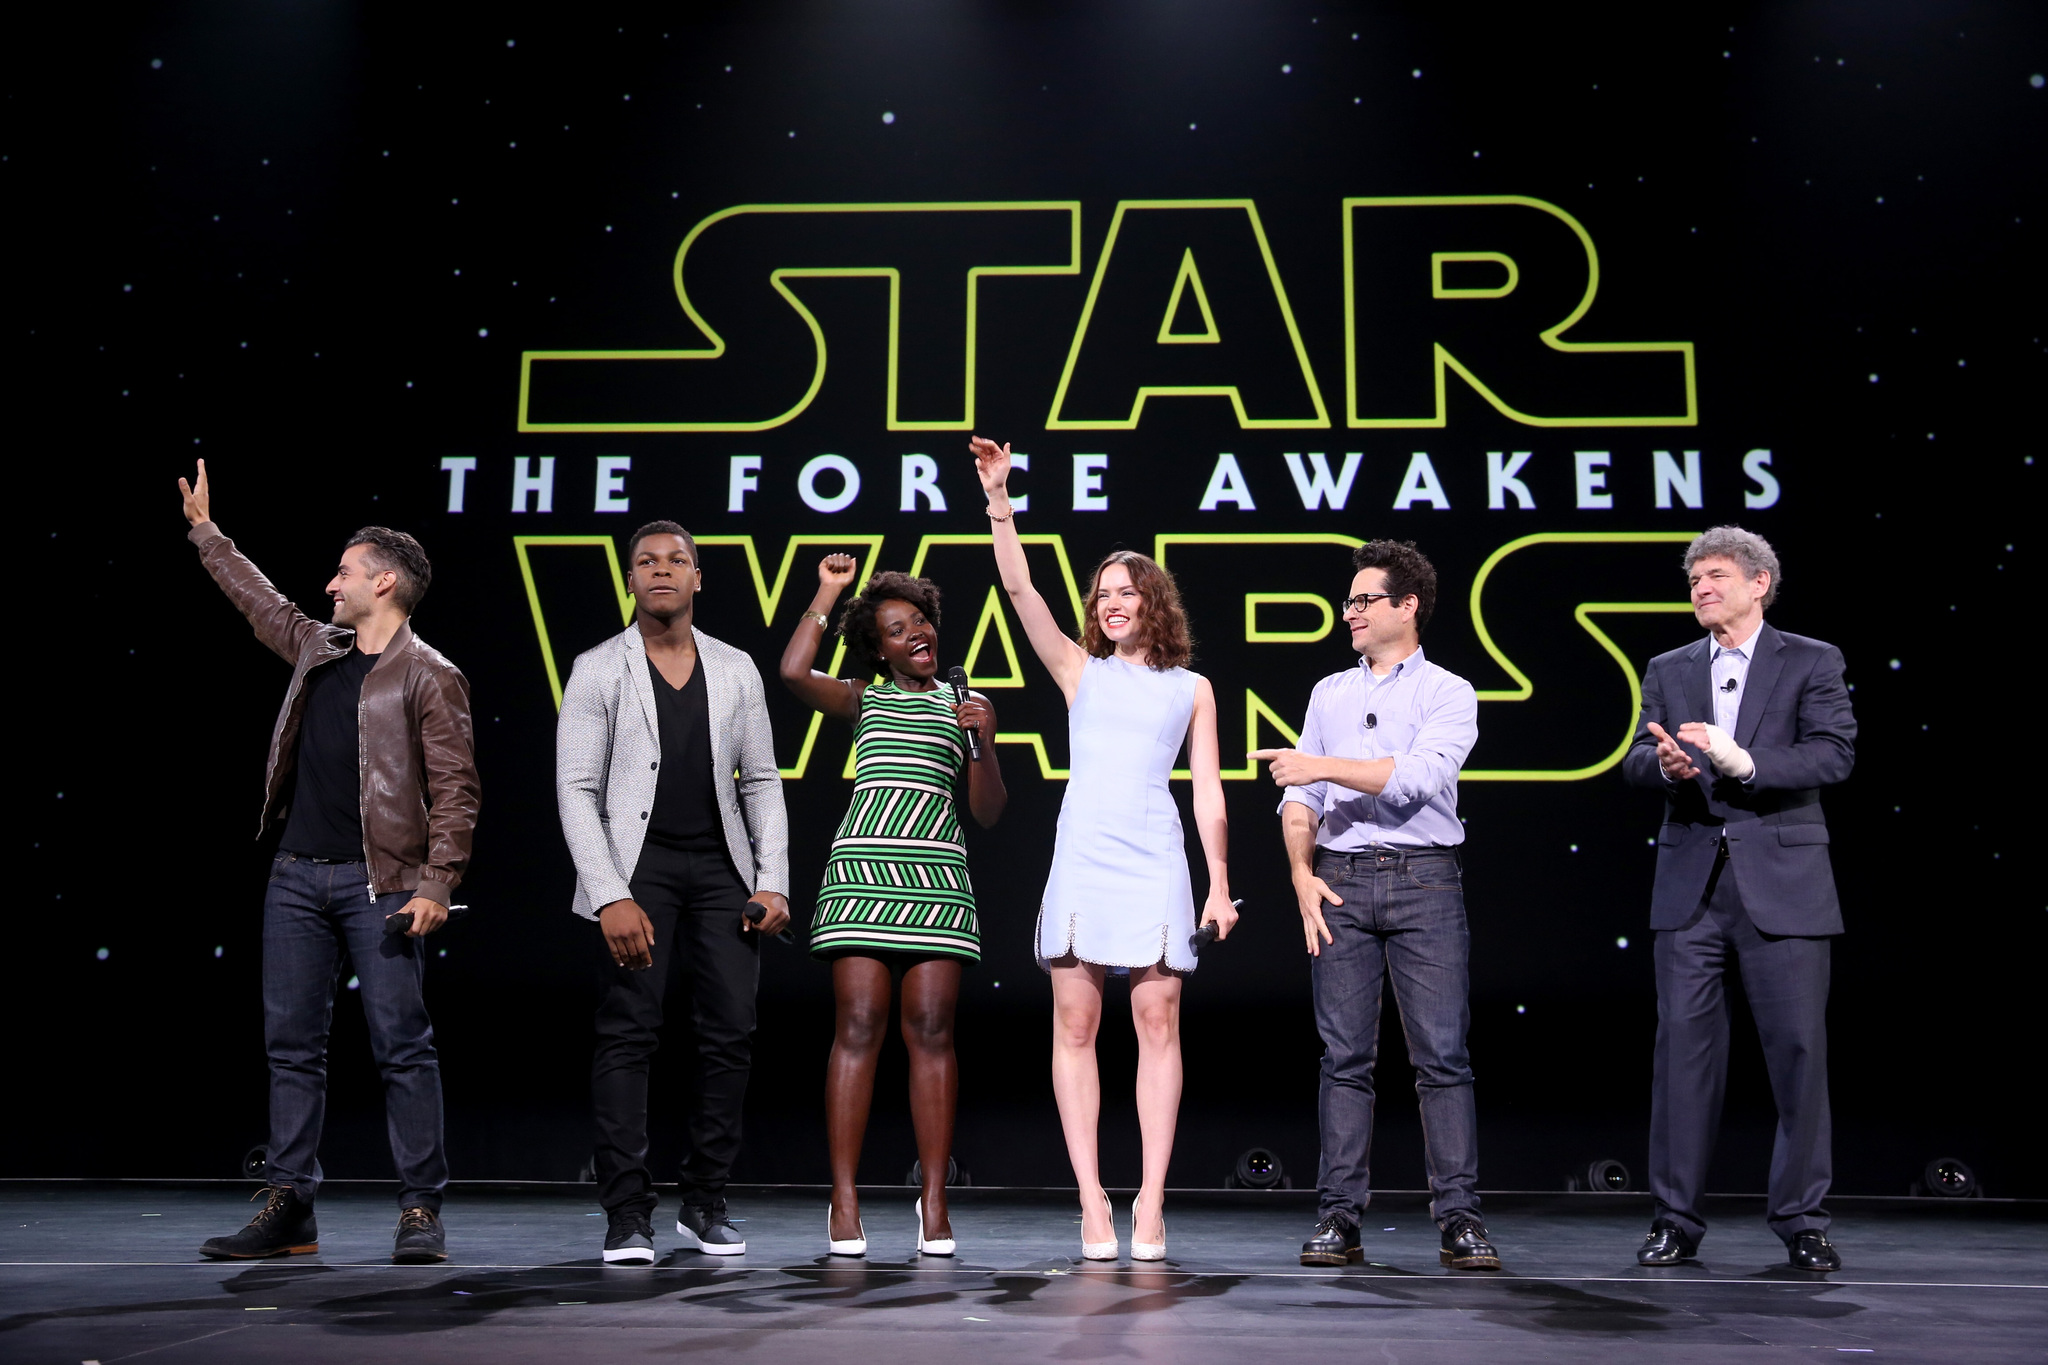 J.J. Abrams, Alan Horn, Oscar Isaac, Lupita Nyong'o, John Boyega and Daisy Ridley at event of Zvaigzdziu karai: galia nubunda (2015)